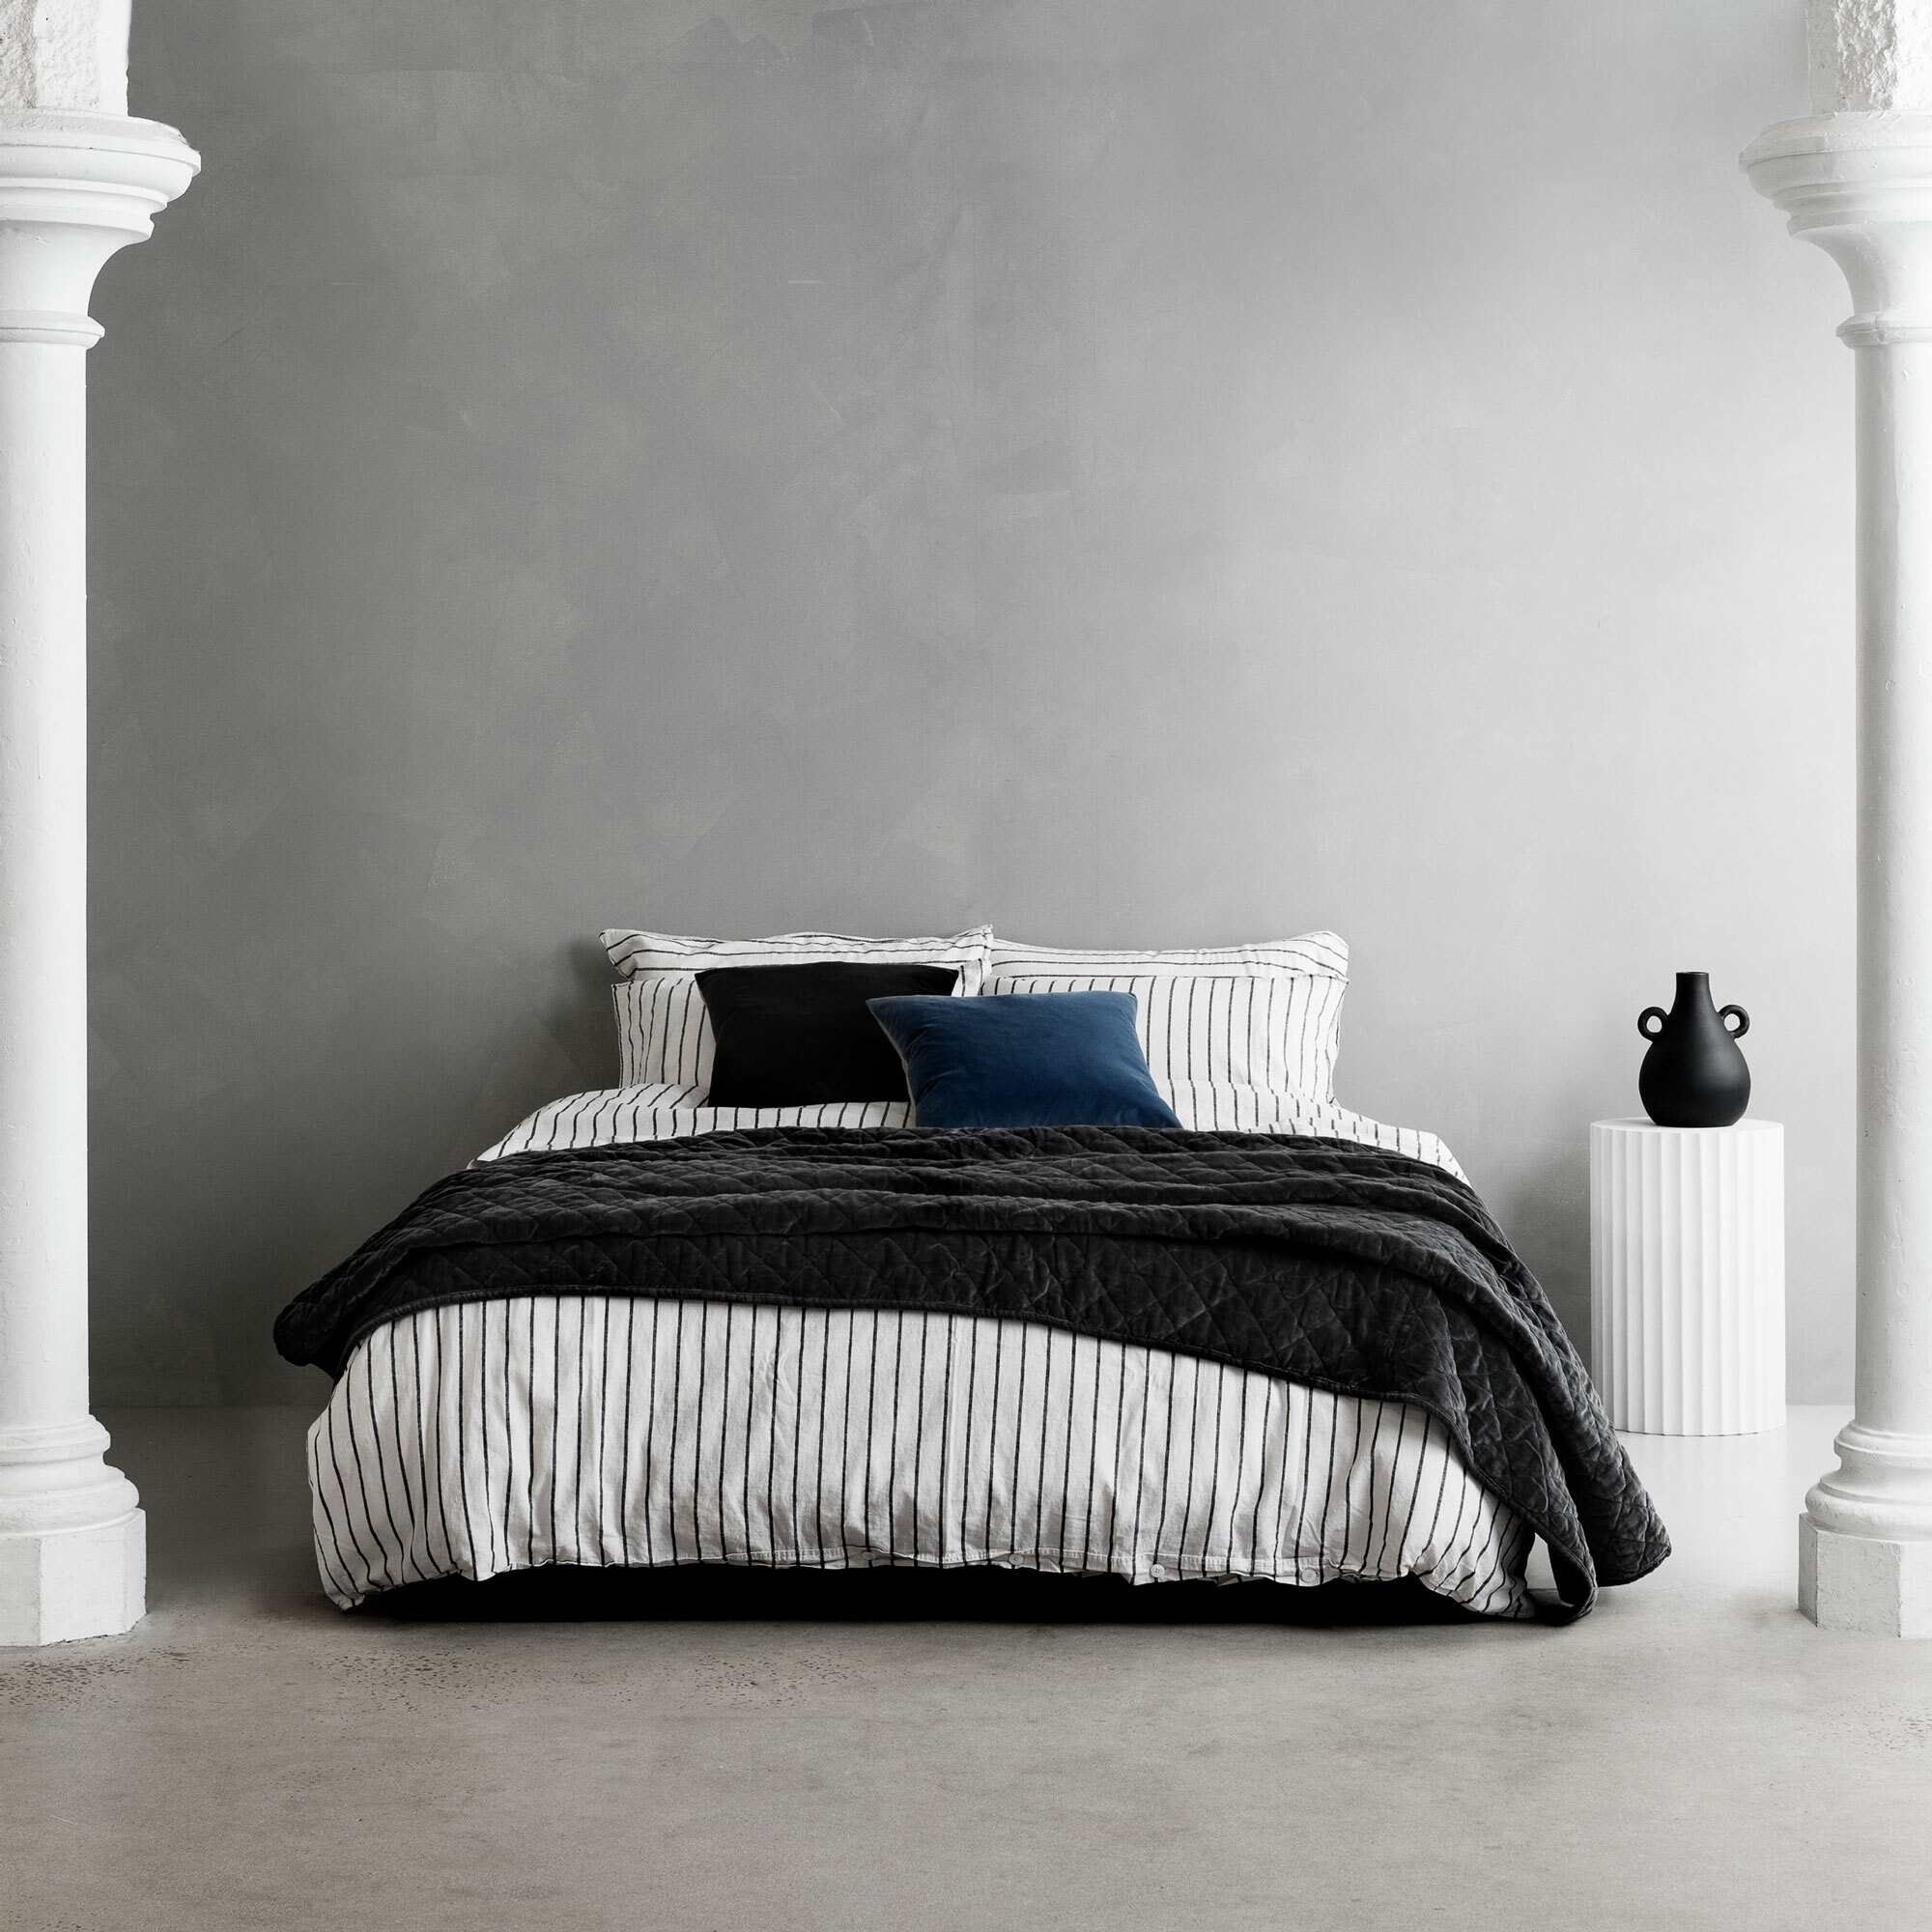 L Mhome Black White Stripe Loft, White And Black Striped Duvet Cover